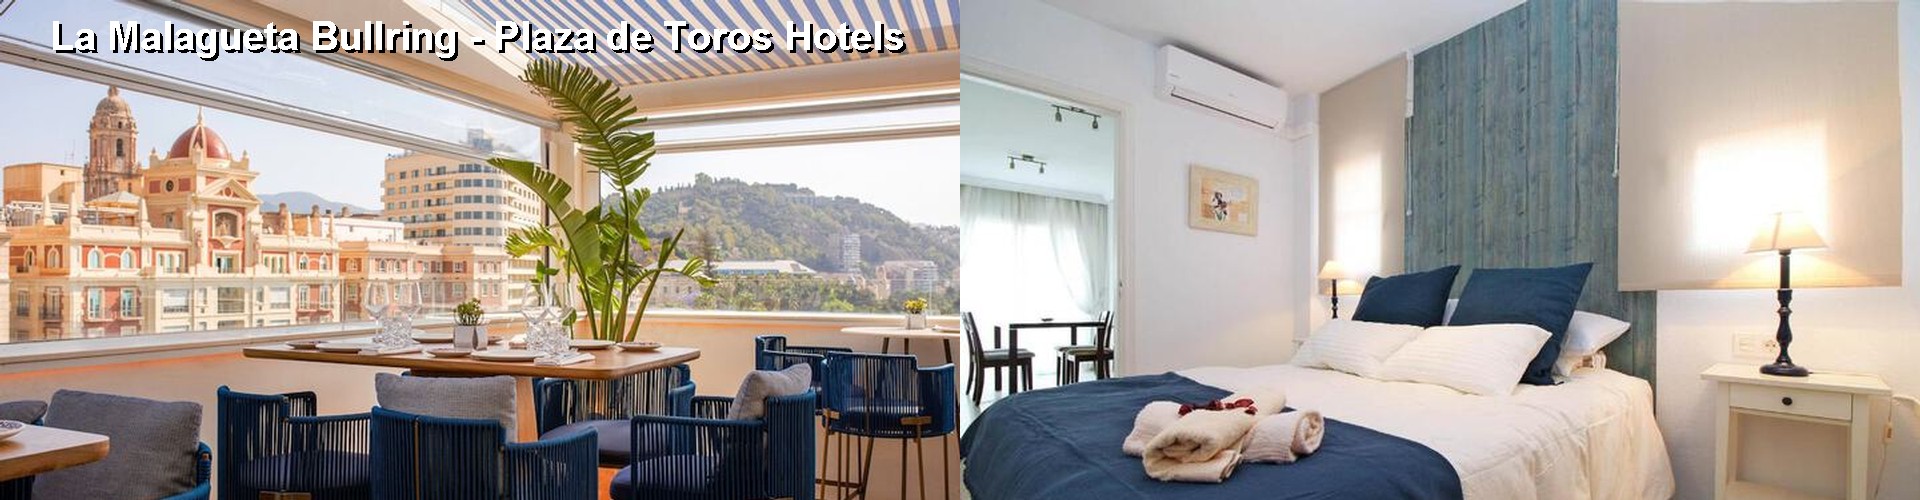 5 Best Hotels near La Malagueta Bullring - Plaza de Toros